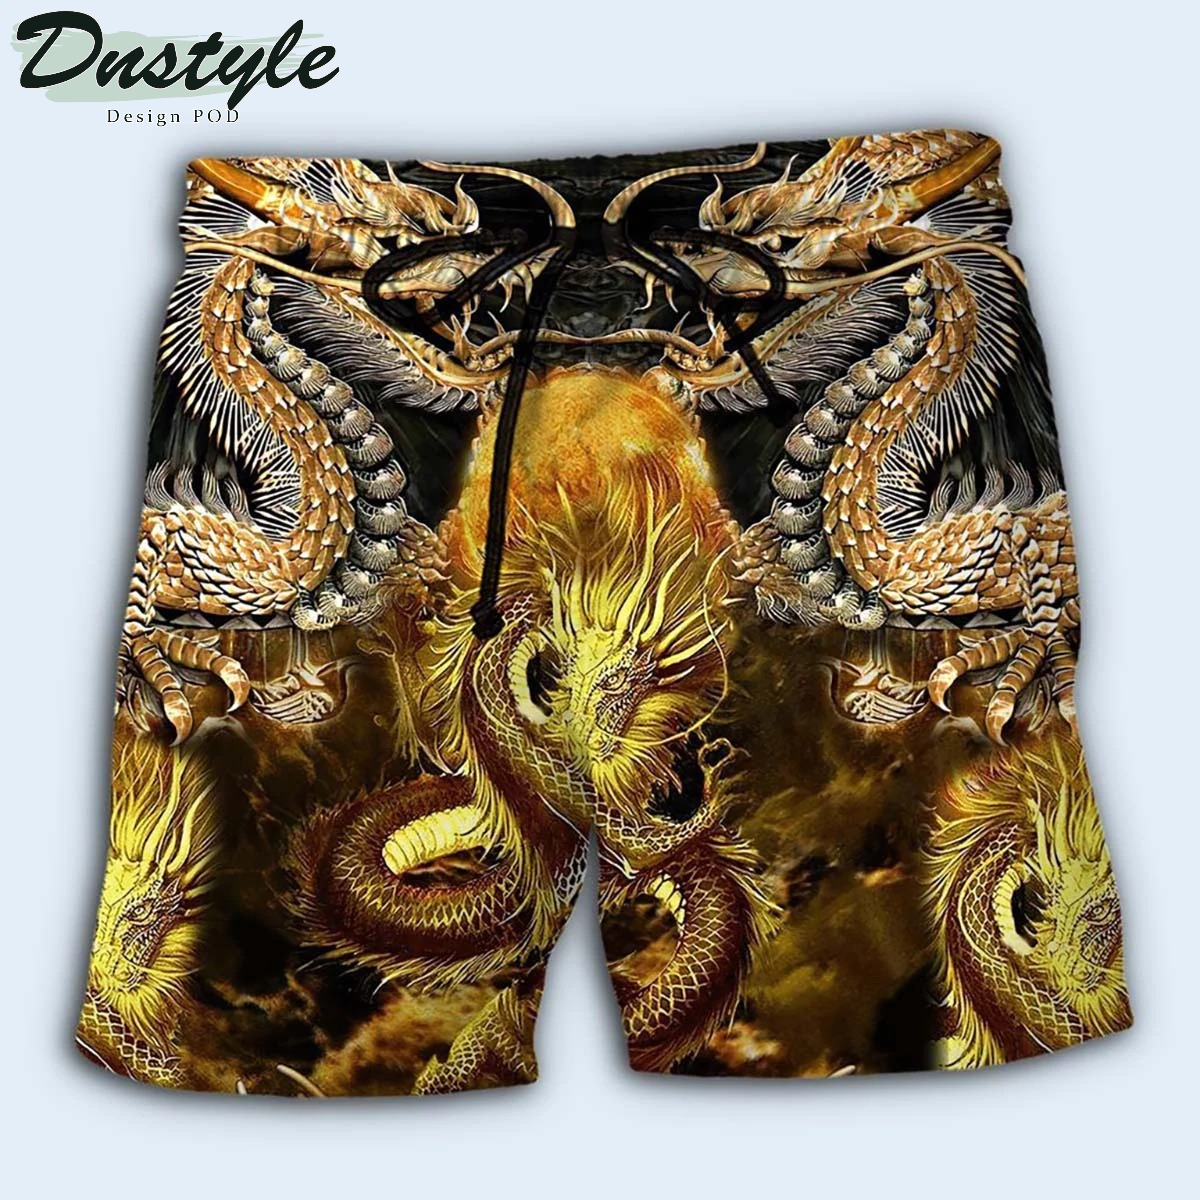 Dragon Love Life Style Limited Edition Hawaiian Shirt